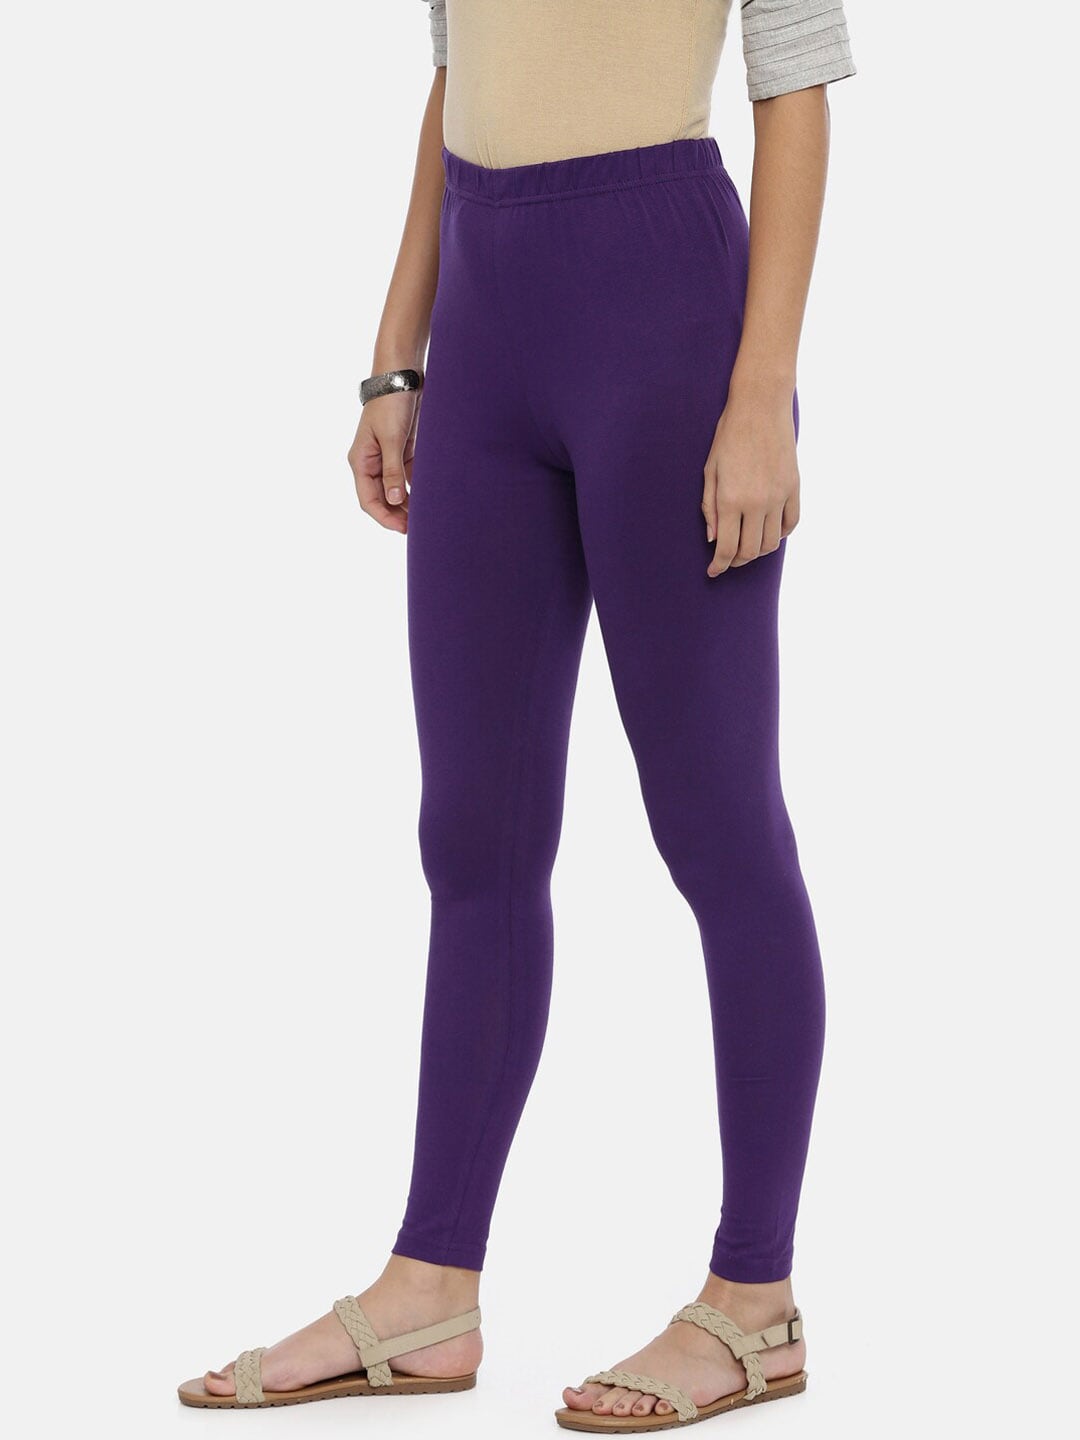 Souchii Violet Solid Slim-Fit Ankle-Length Leggings